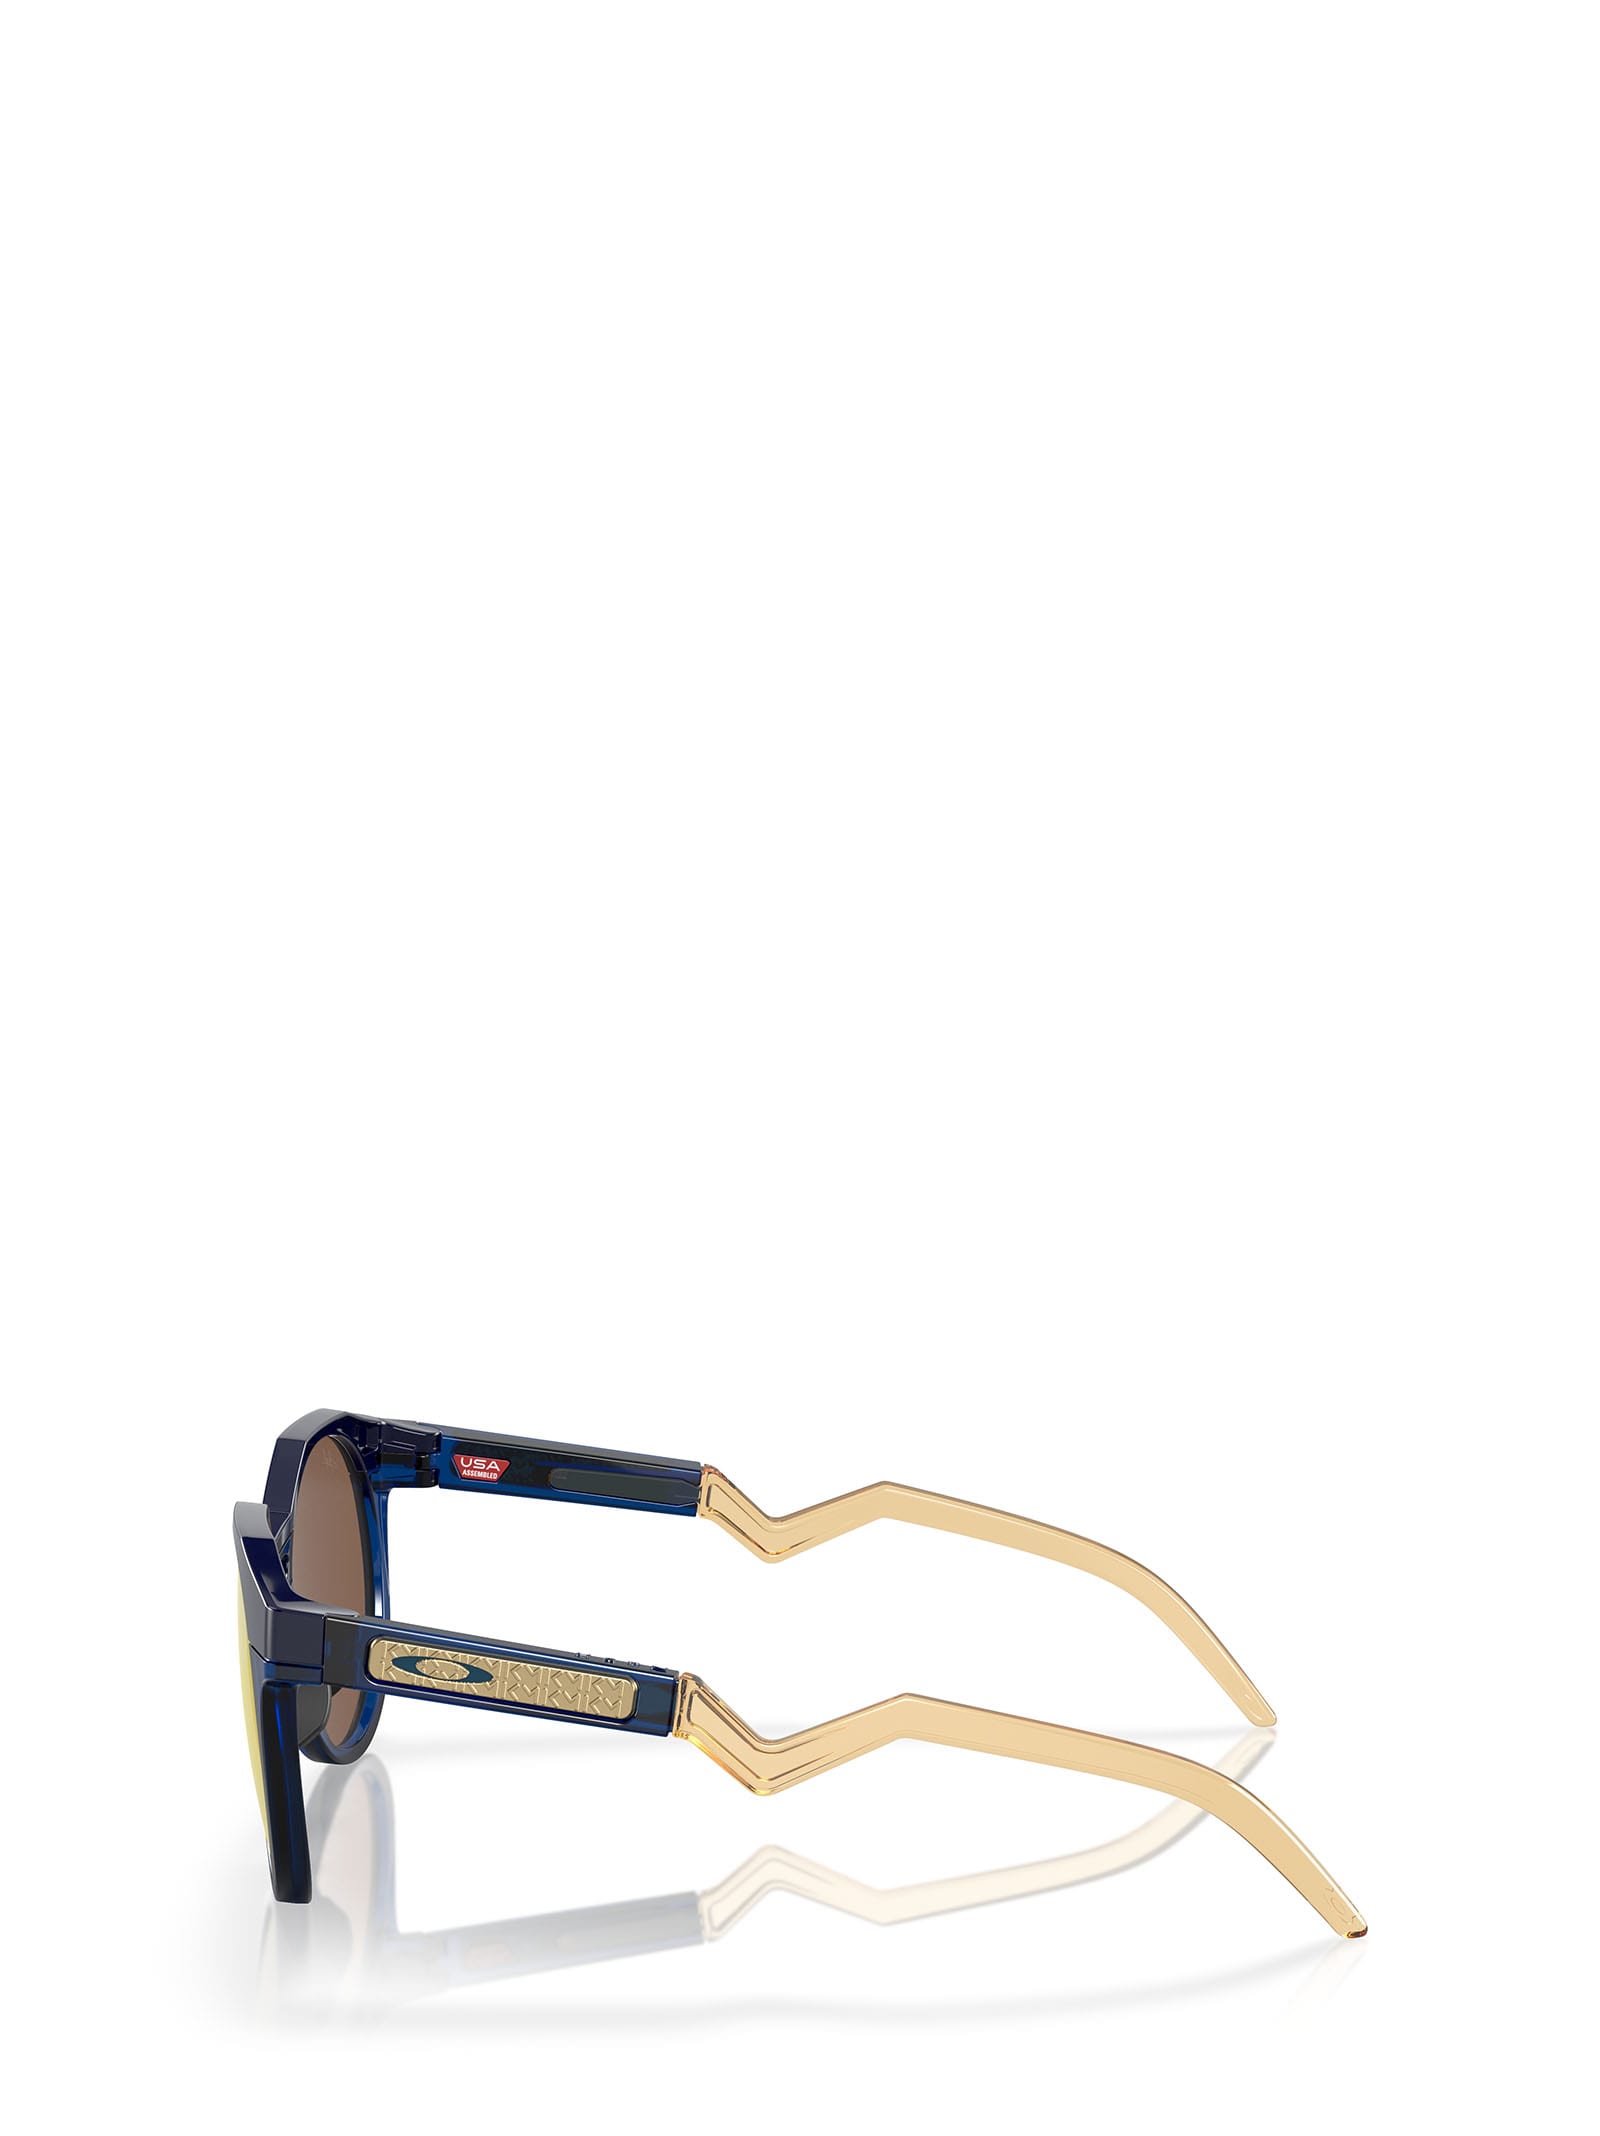 Shop Oakley Oo9242 Navy / Transparent Blue Sunglasses